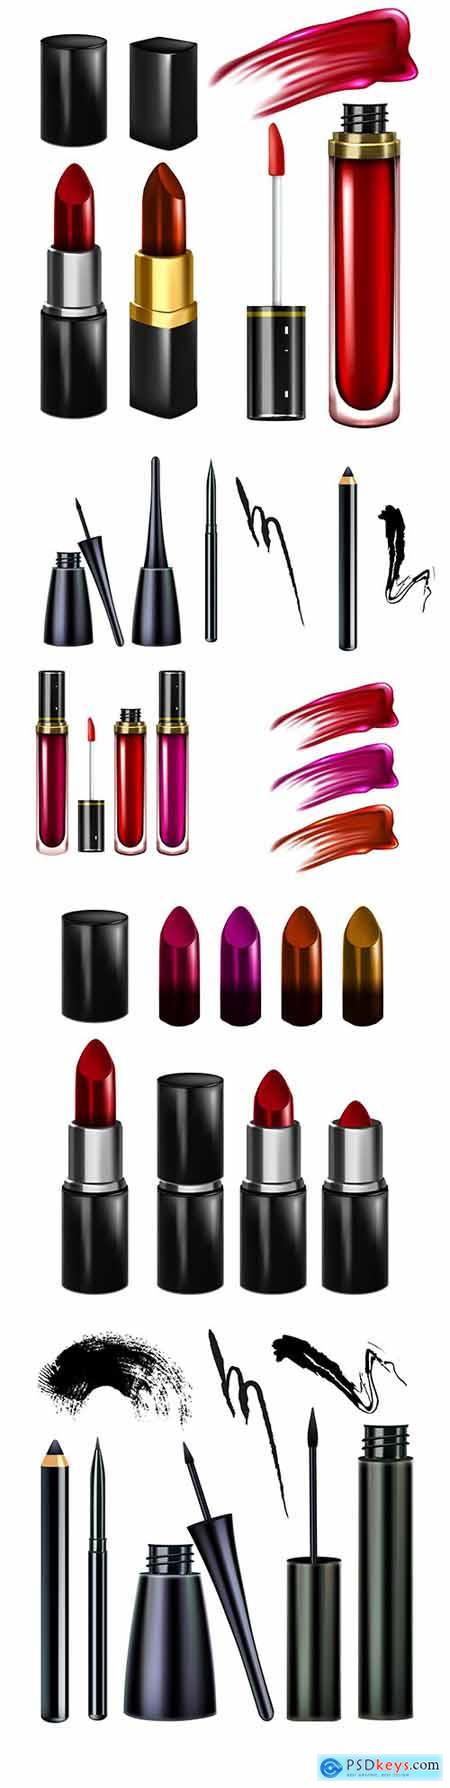 Lipstick and mascara cosmetics make-up realistic 3d illustrations